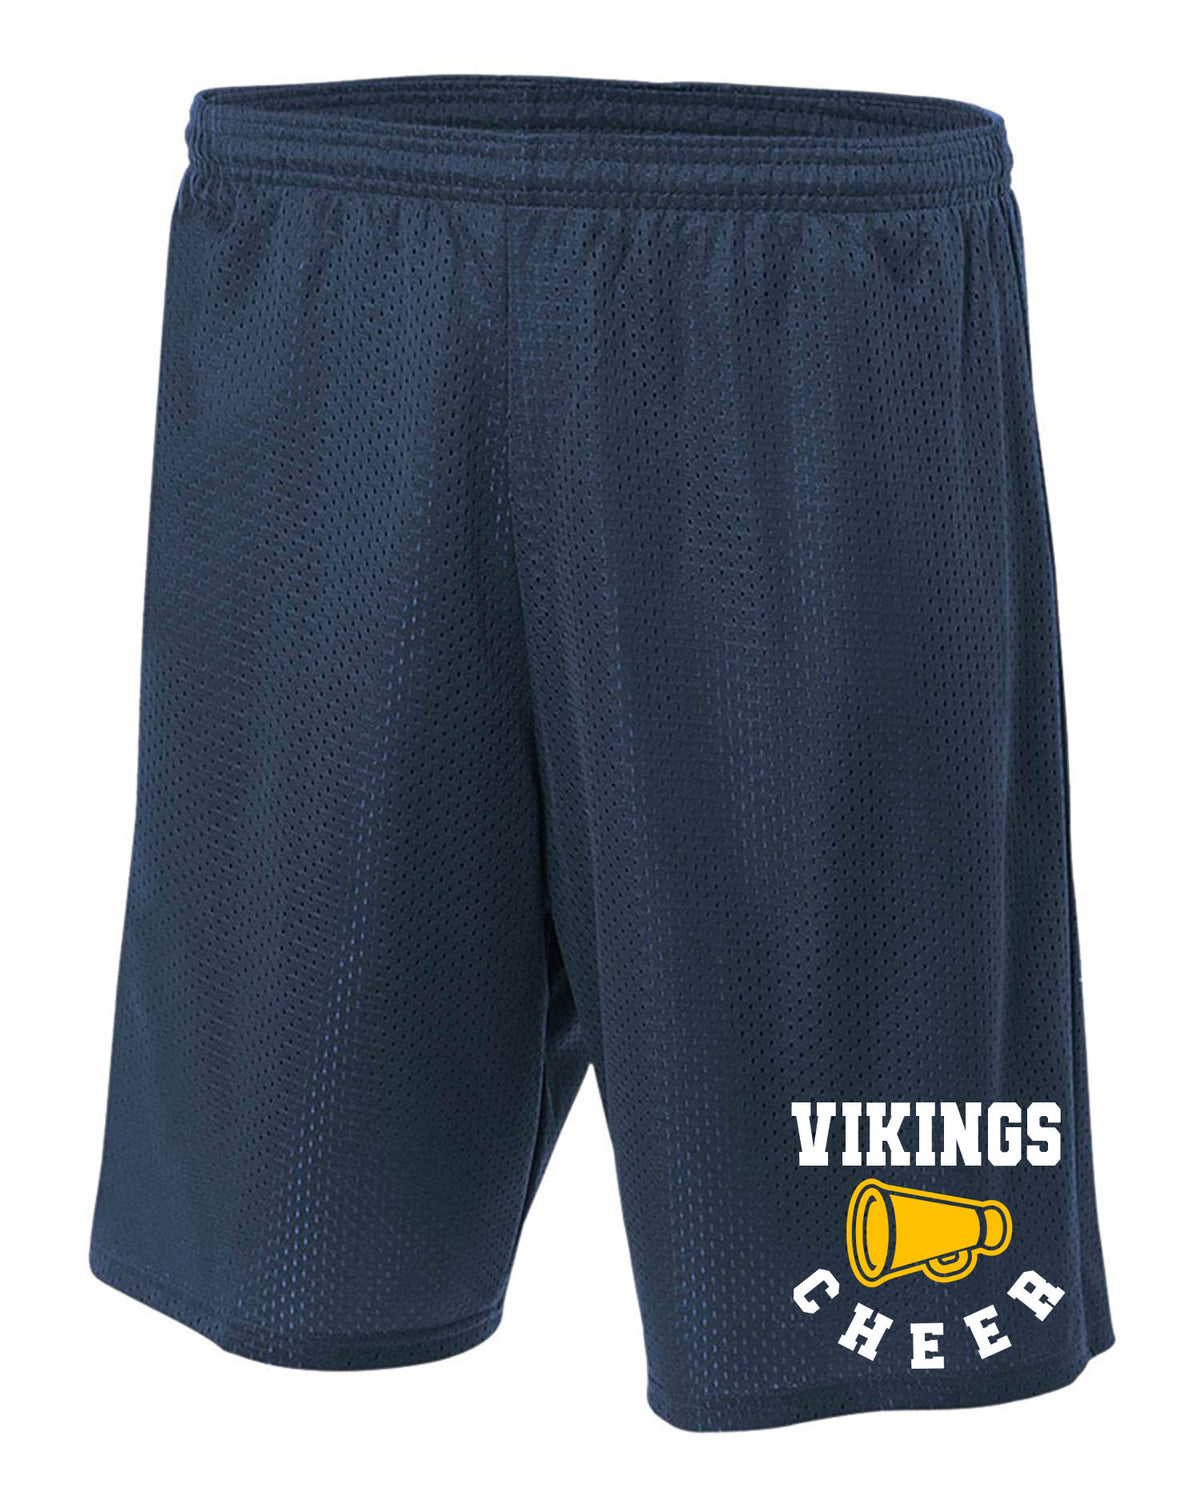 Vernon Vikings Cheer Design 13 Mesh Shorts